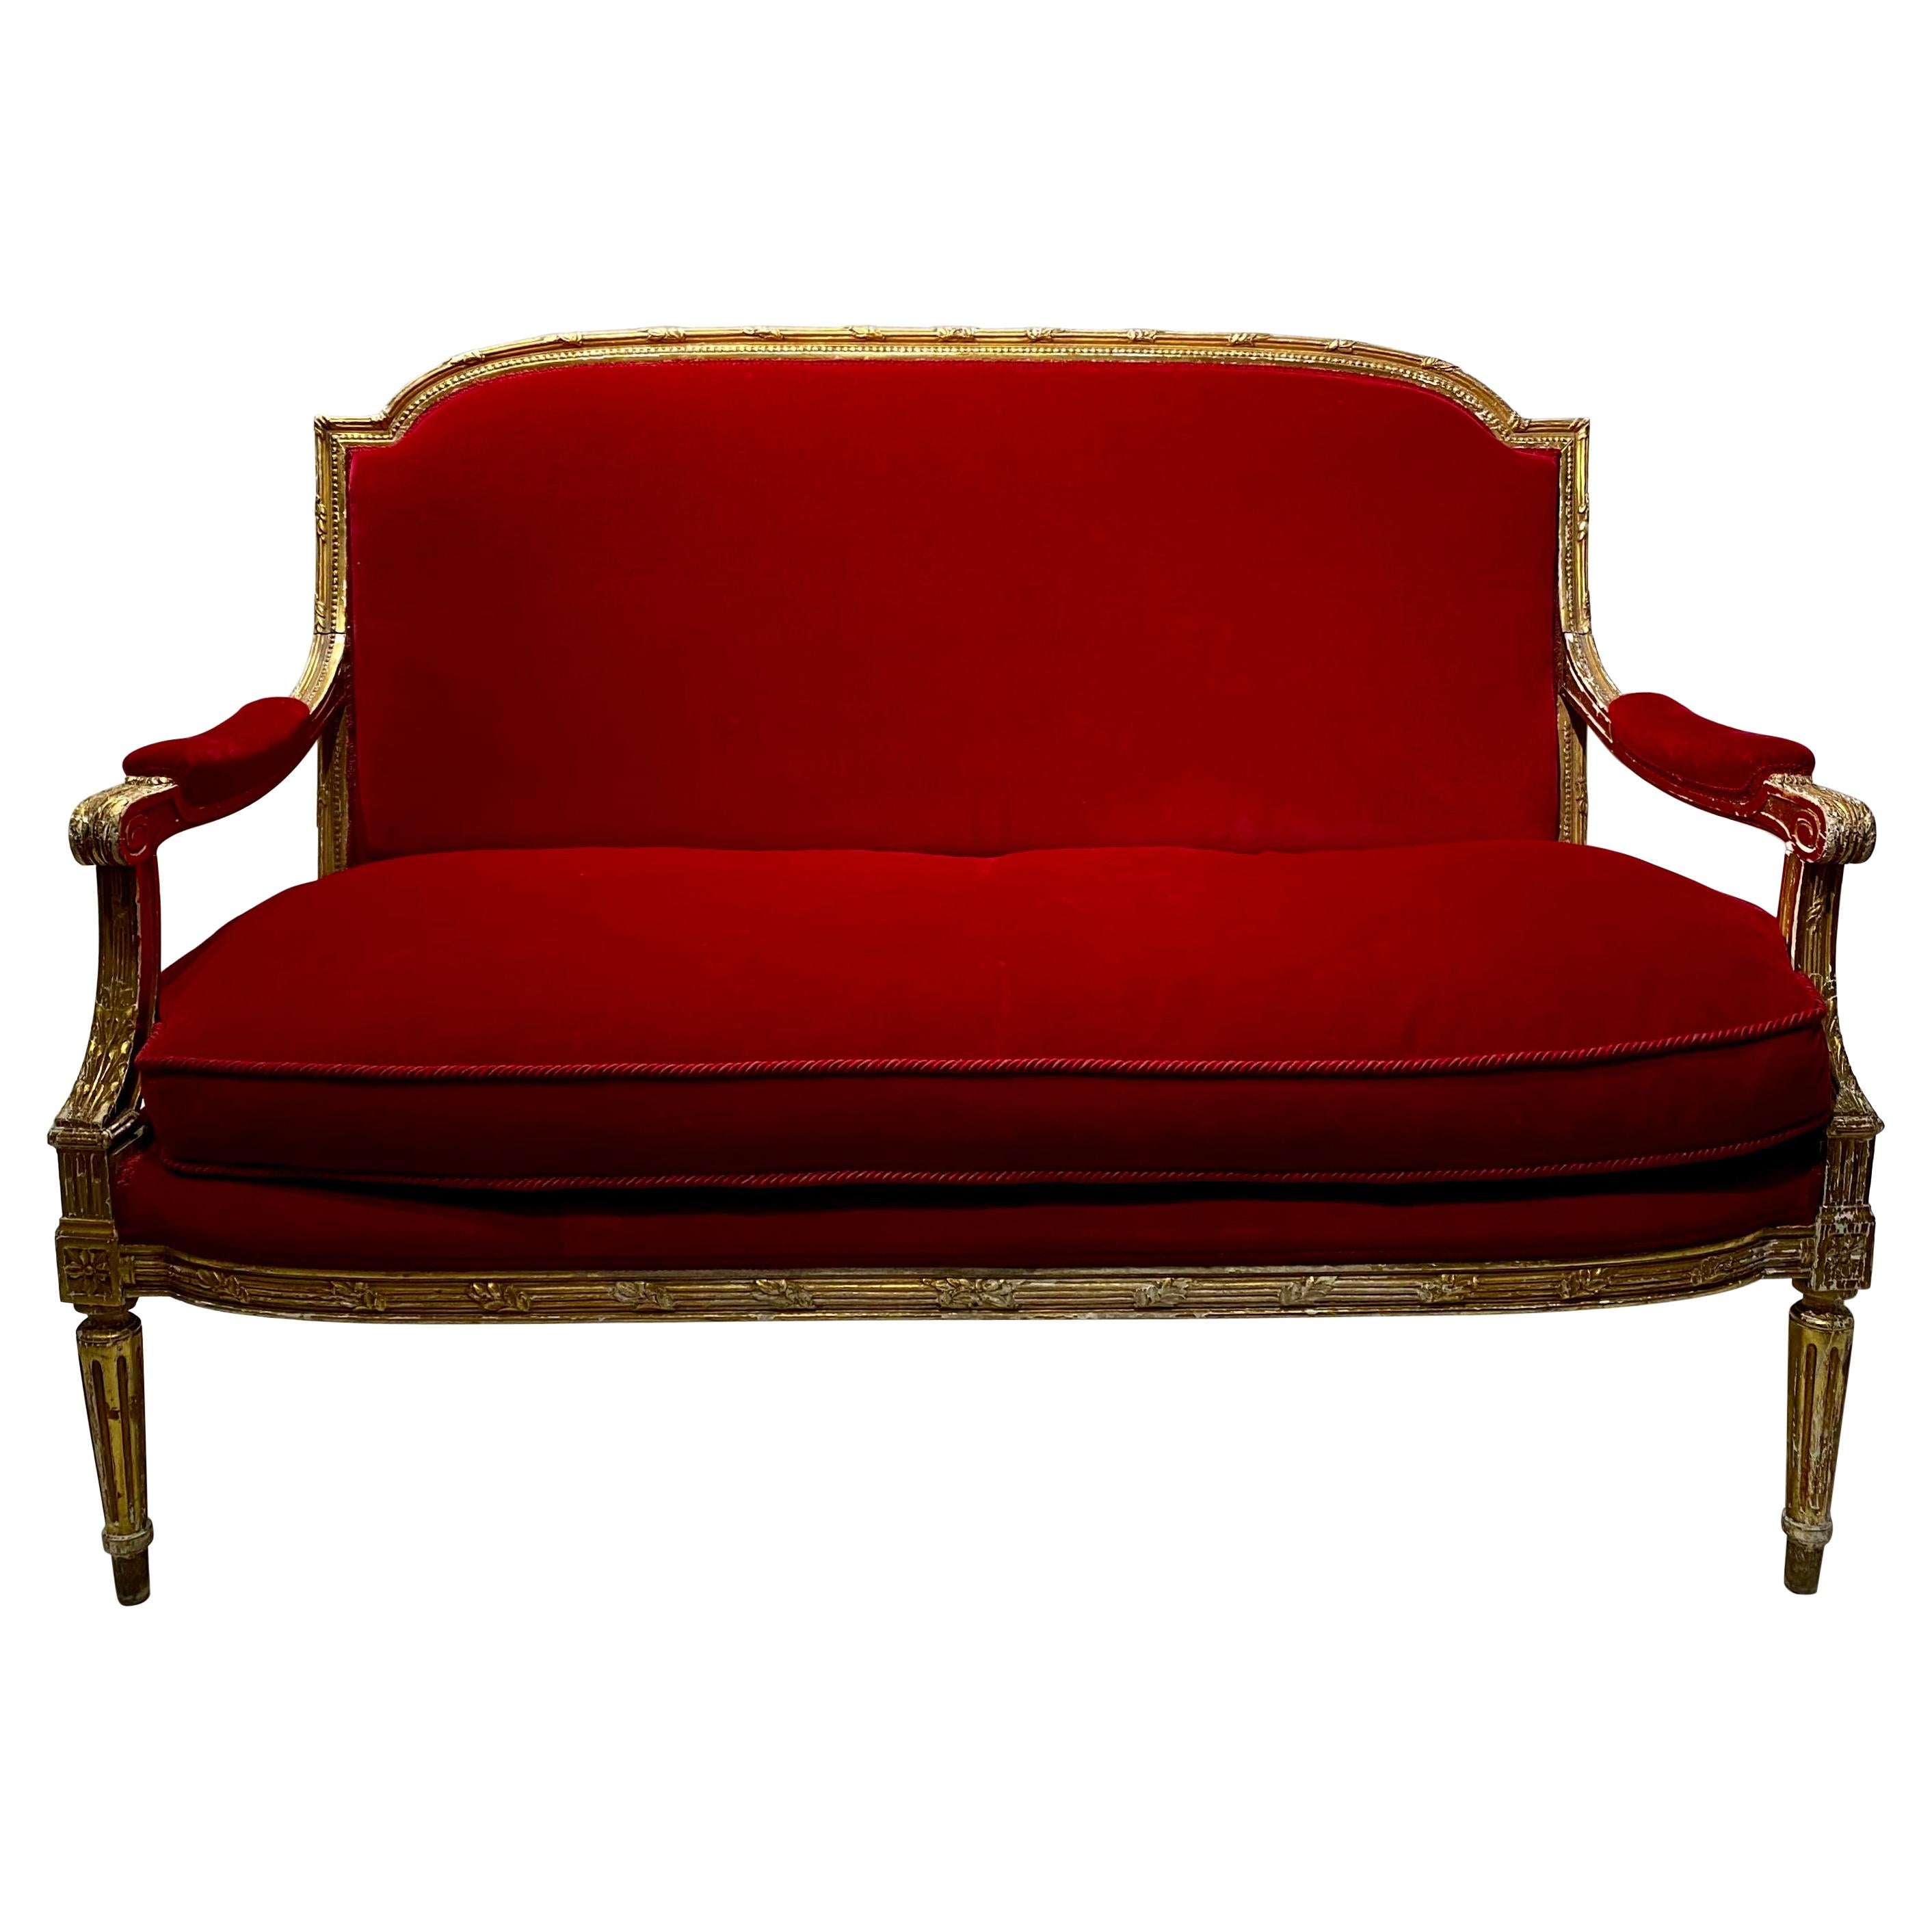 French Giltwood Settee Sofa, Style Louis XVI, Red Velvet, 19th Century